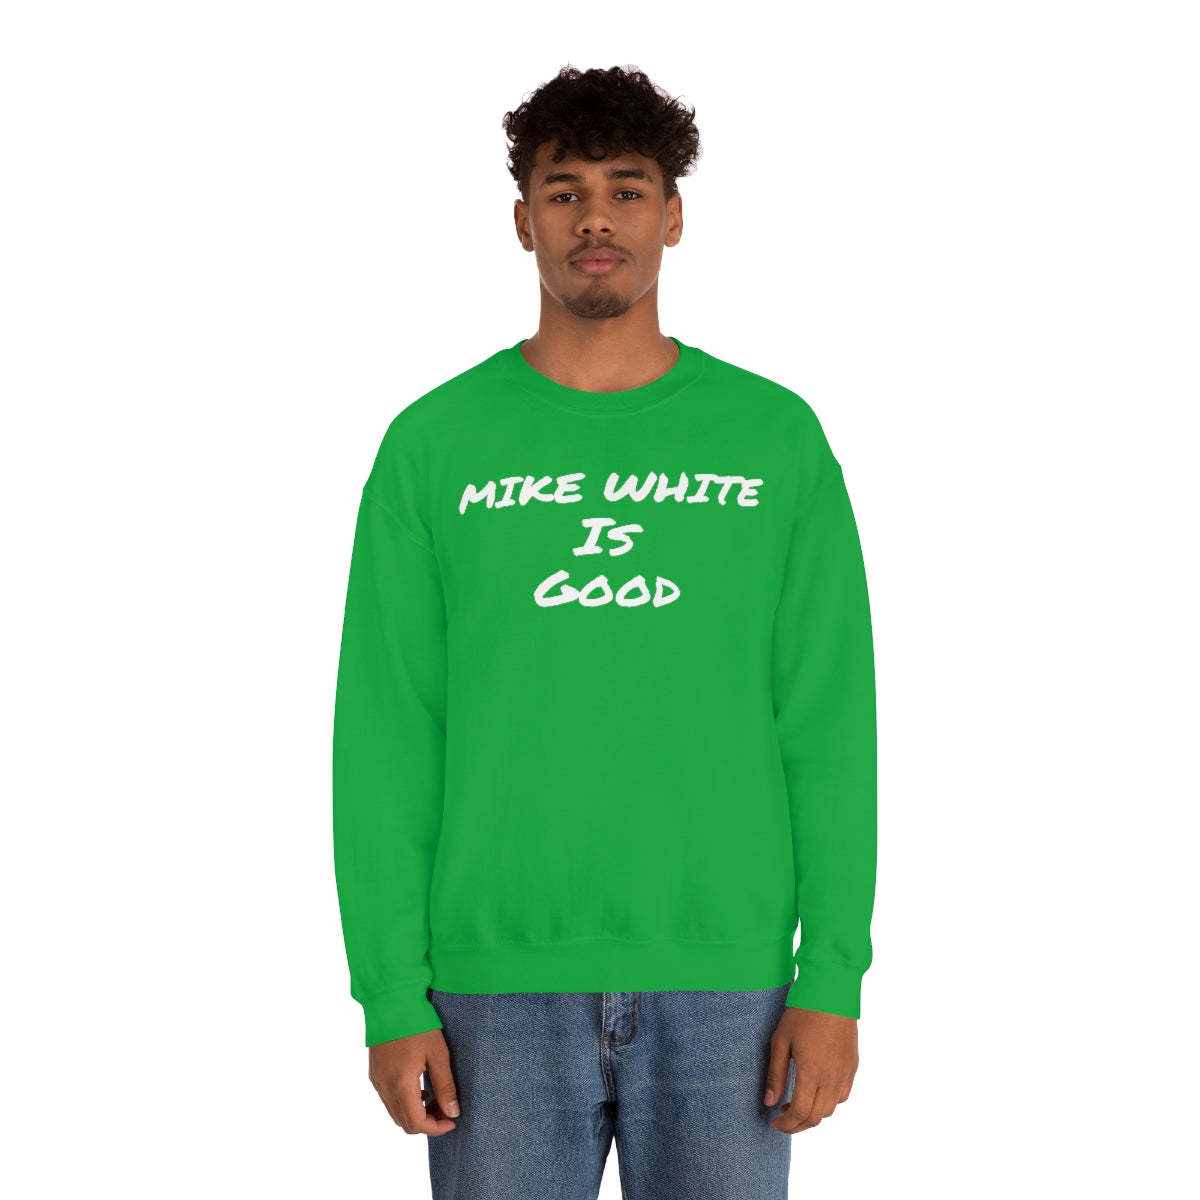 Mike White Is Good Crewneck Sweatshirt - IsGoodBrand